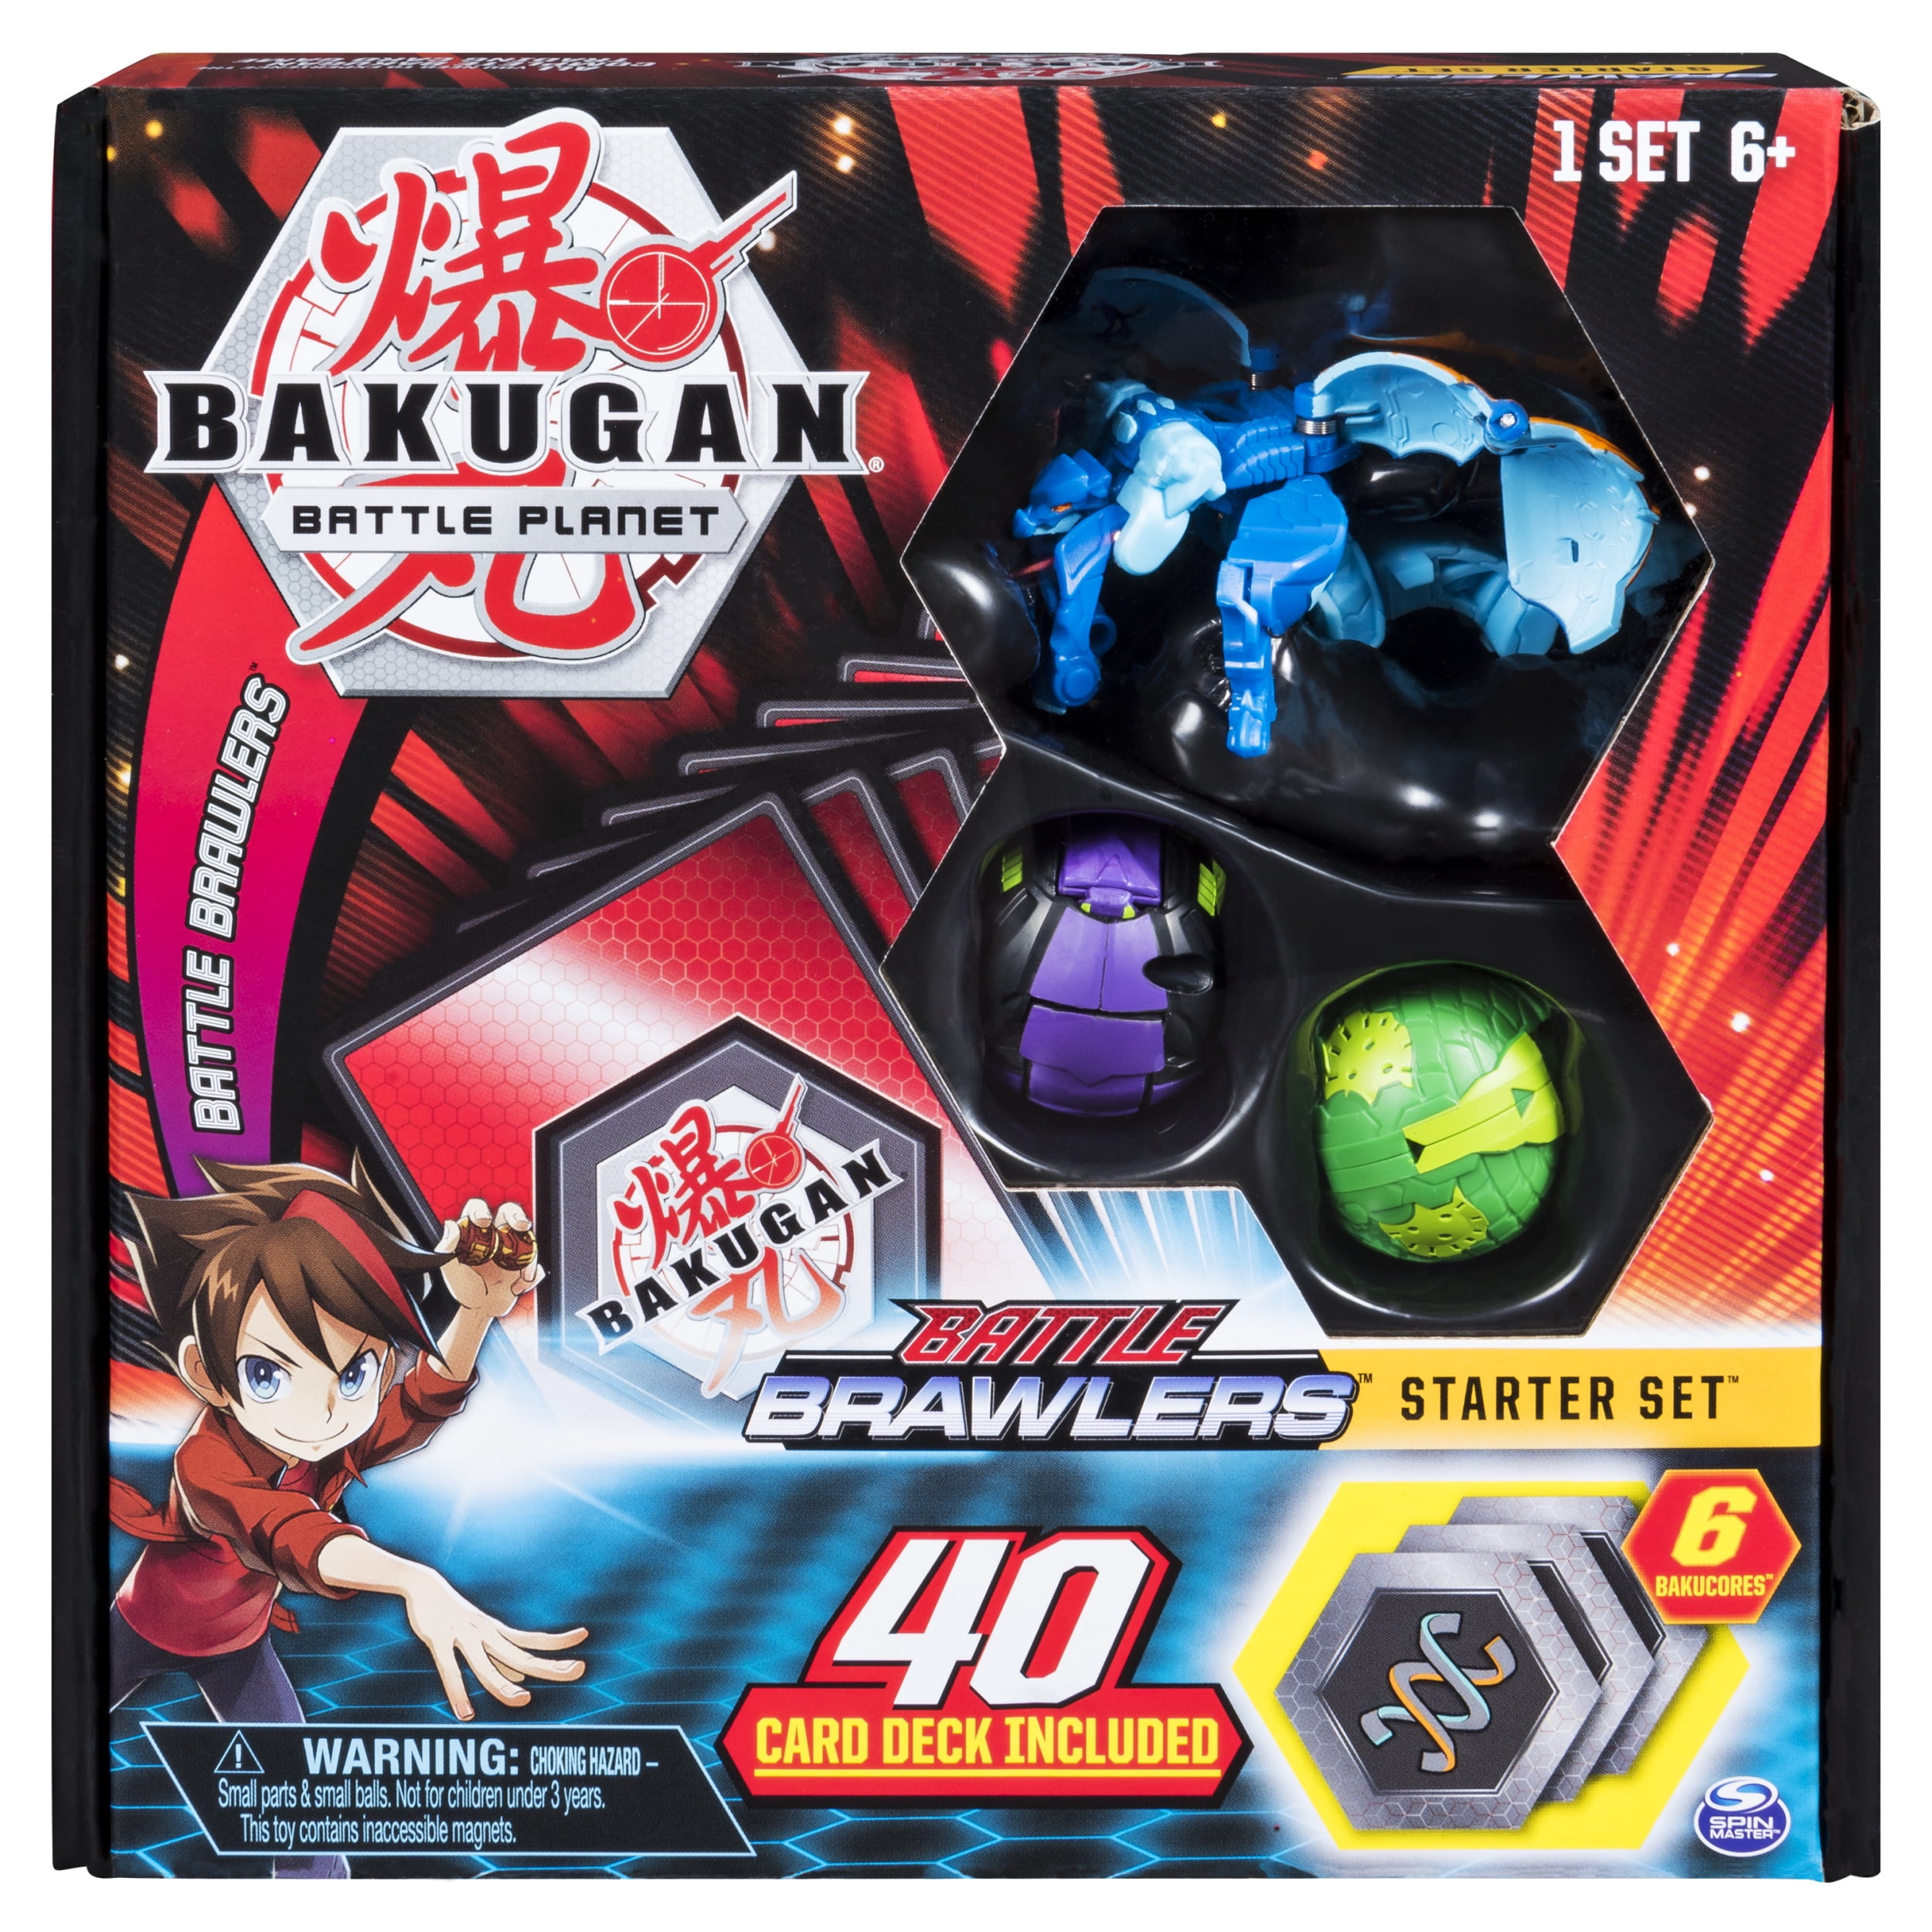 Bakugan Battle Brawlers – Many Cool Things